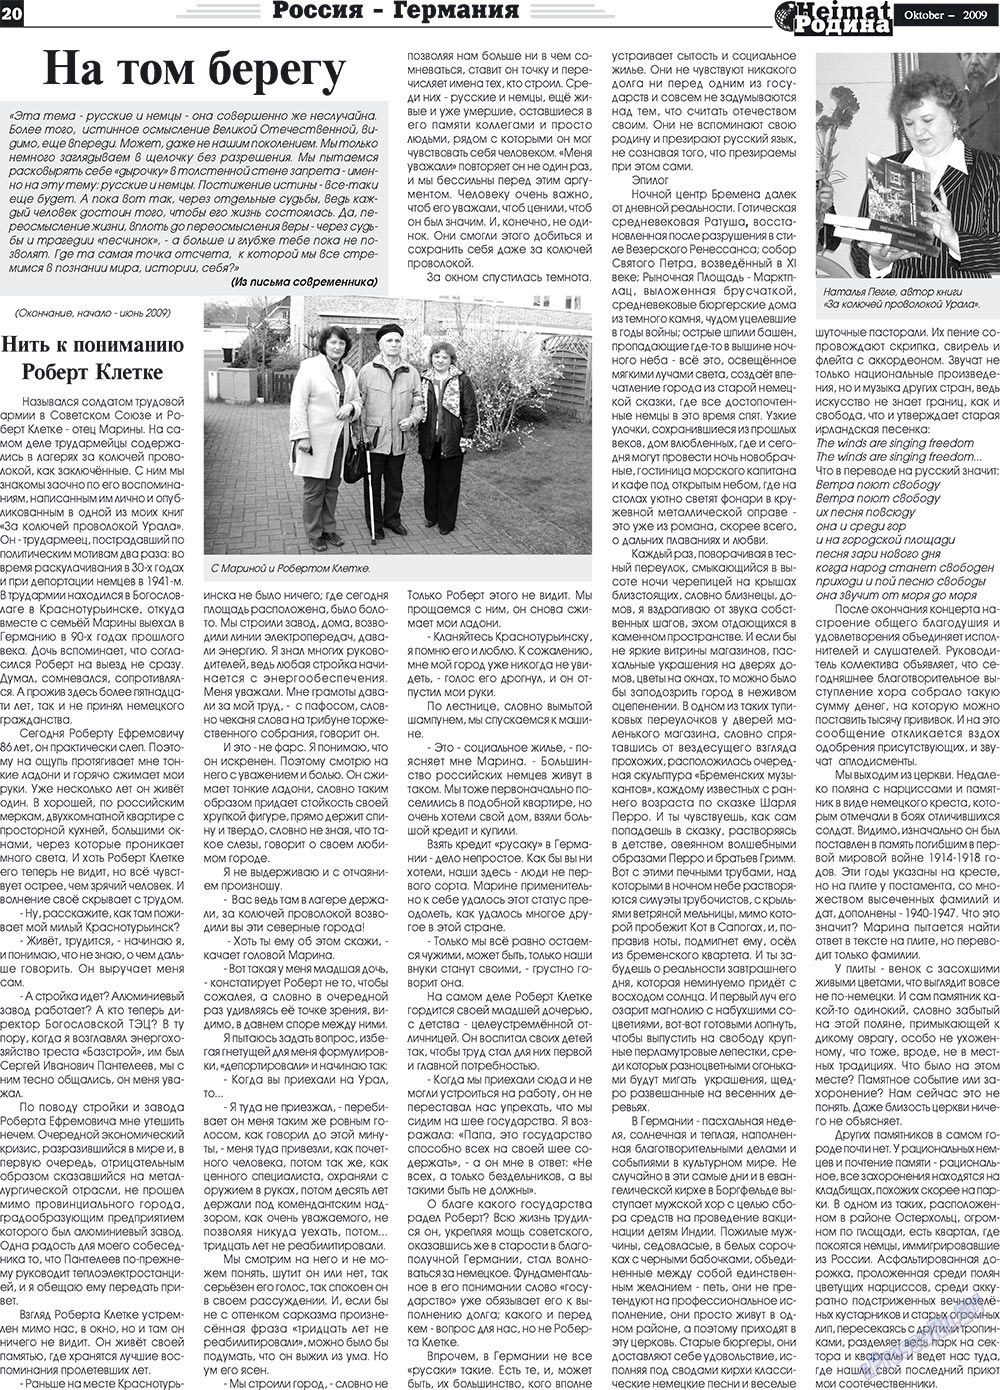 Heimat-Родина, газета. 2009 №10 стр.20